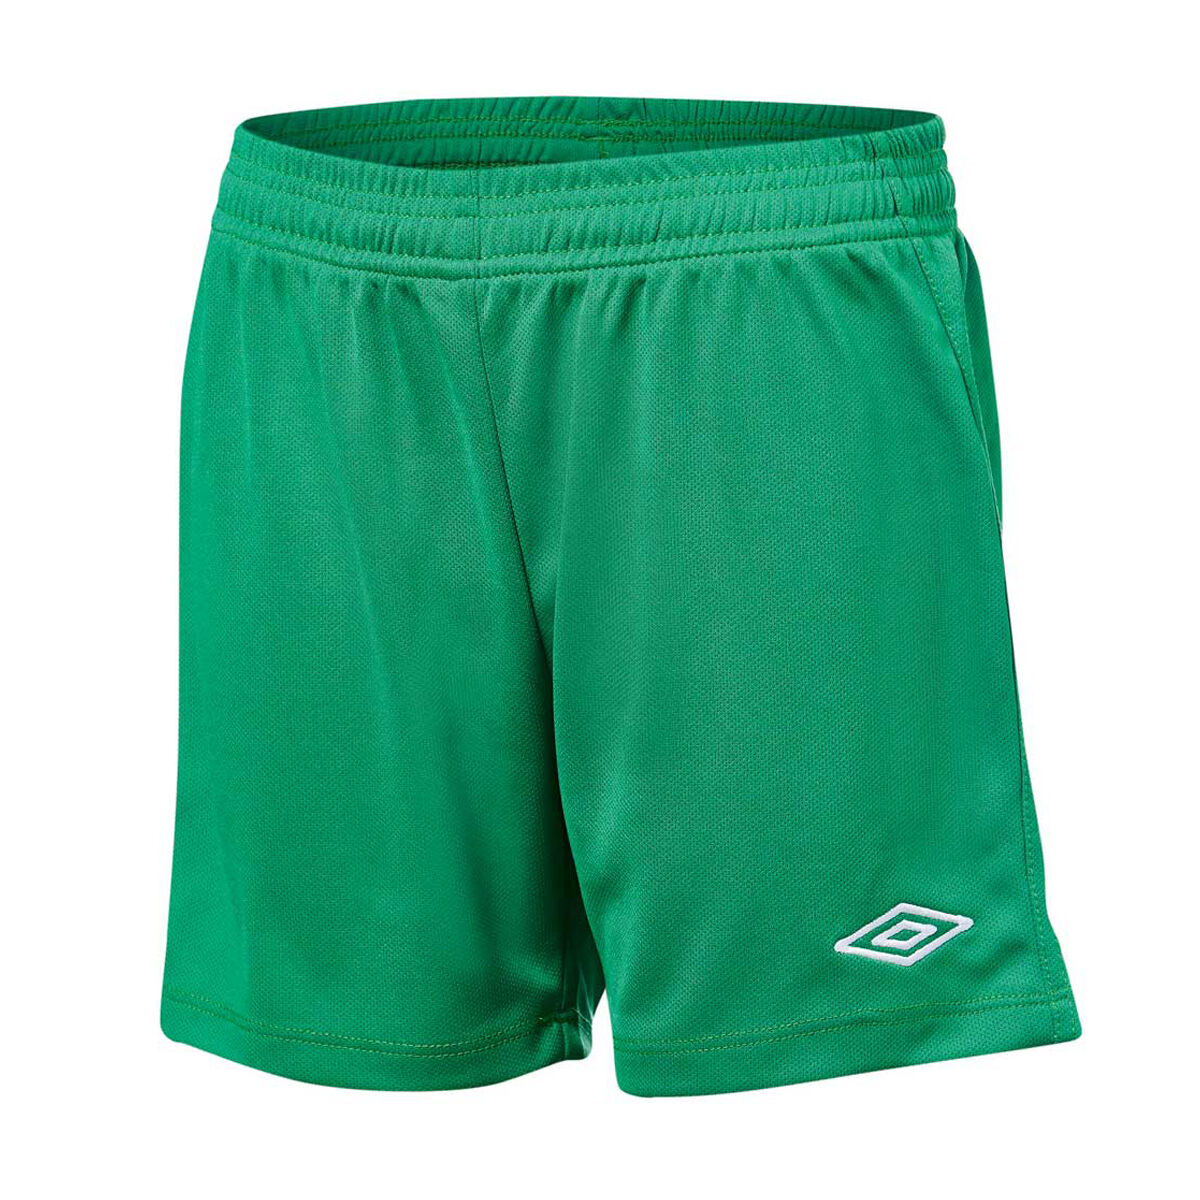 umbro youth soccer shorts